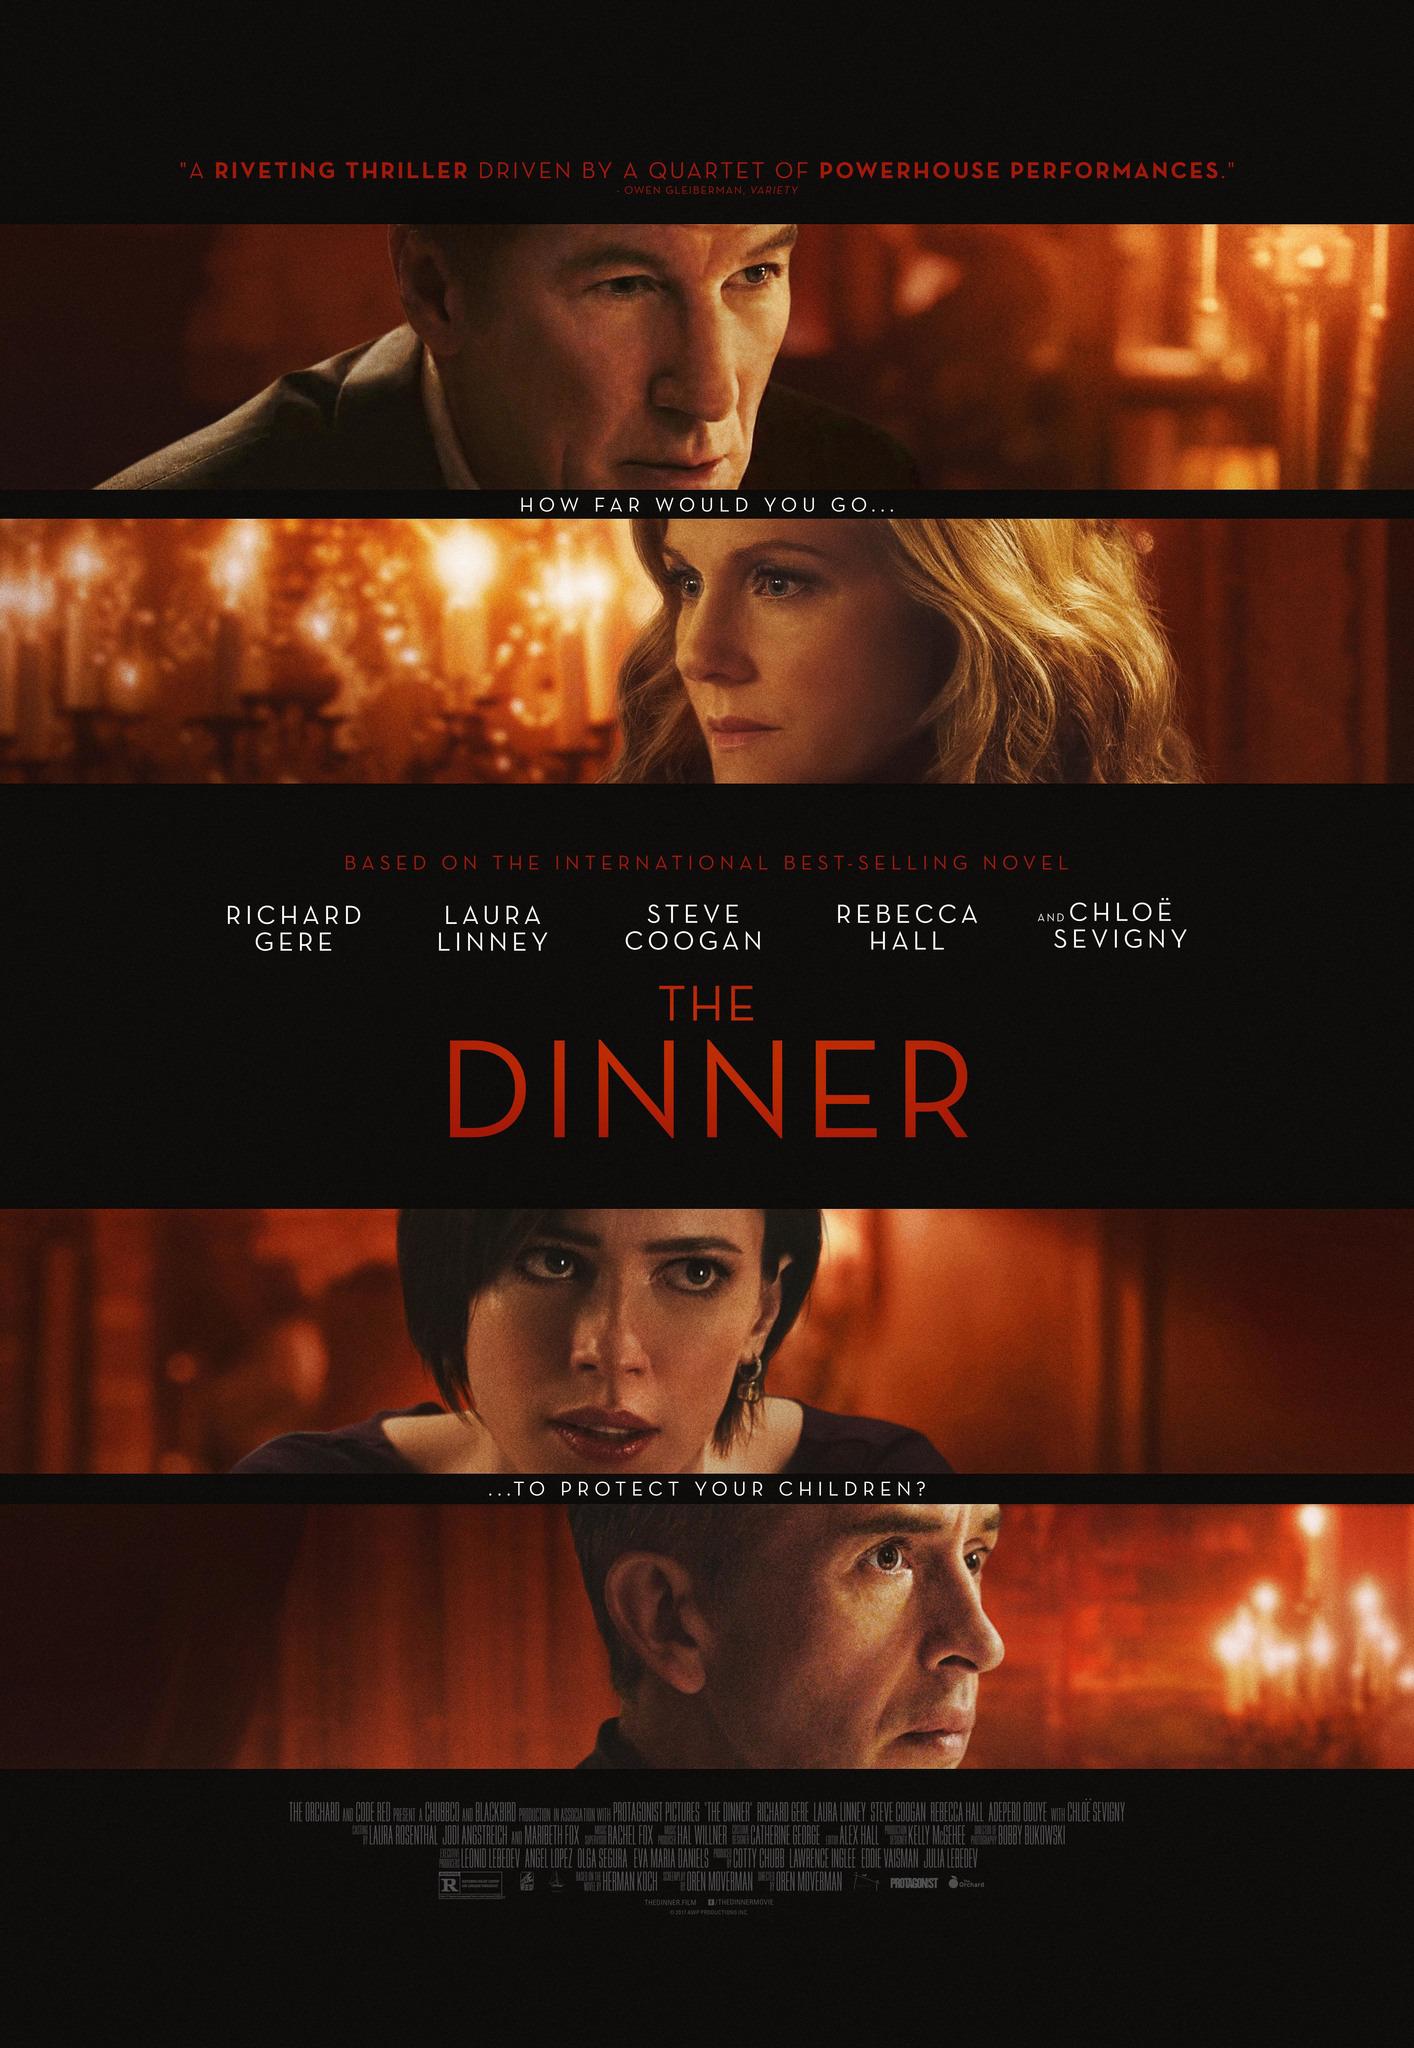 [命运晚餐].The.Dinner.2017.BluRay.1080p.AVC.DTS-HD.MA.5.1-HDHome 29.42G-1.jpg